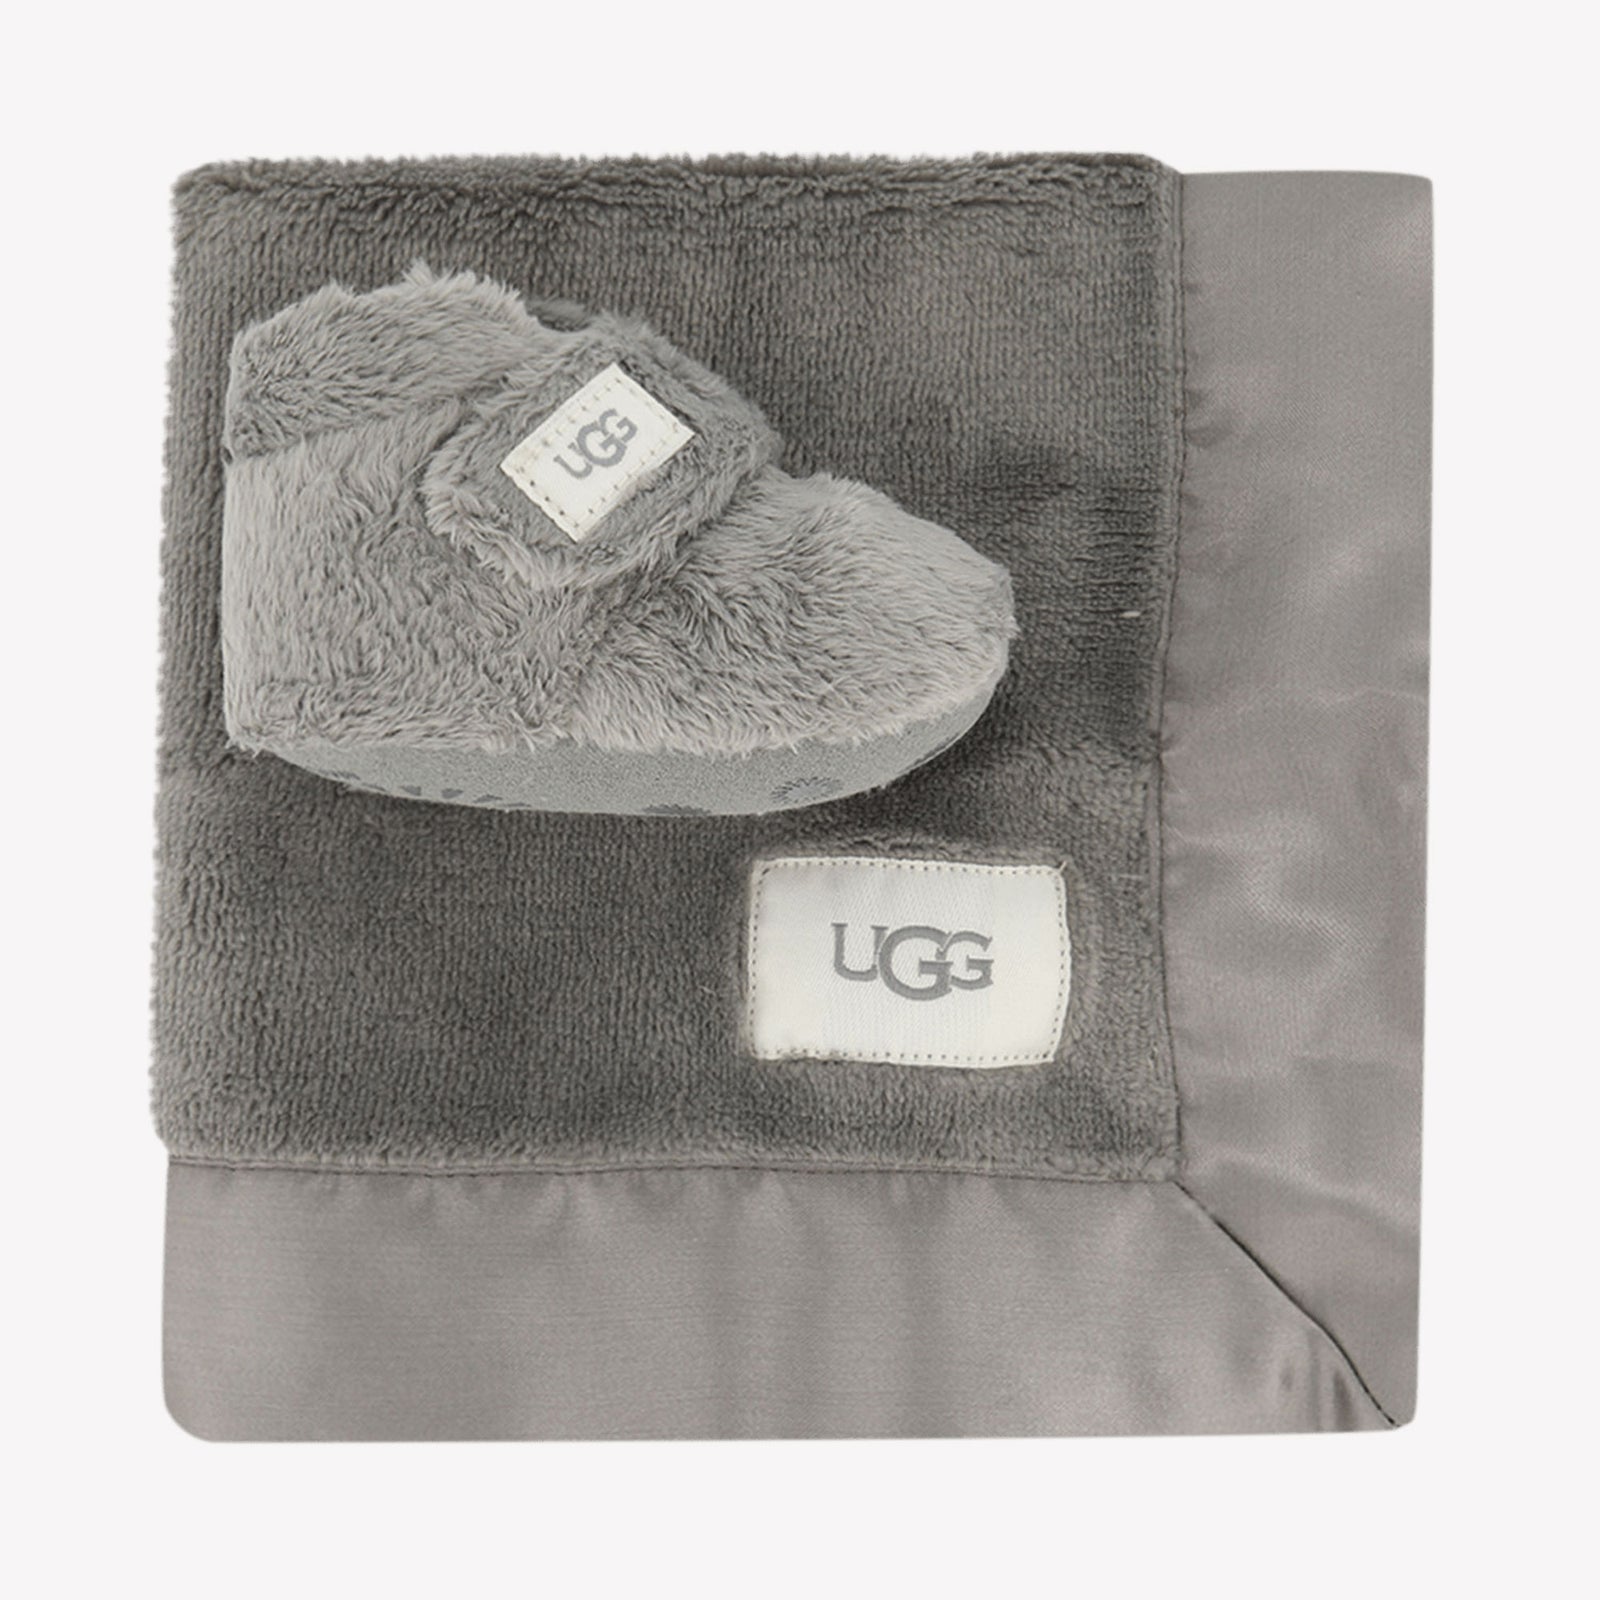 Ugg baby zapatos unisex gris